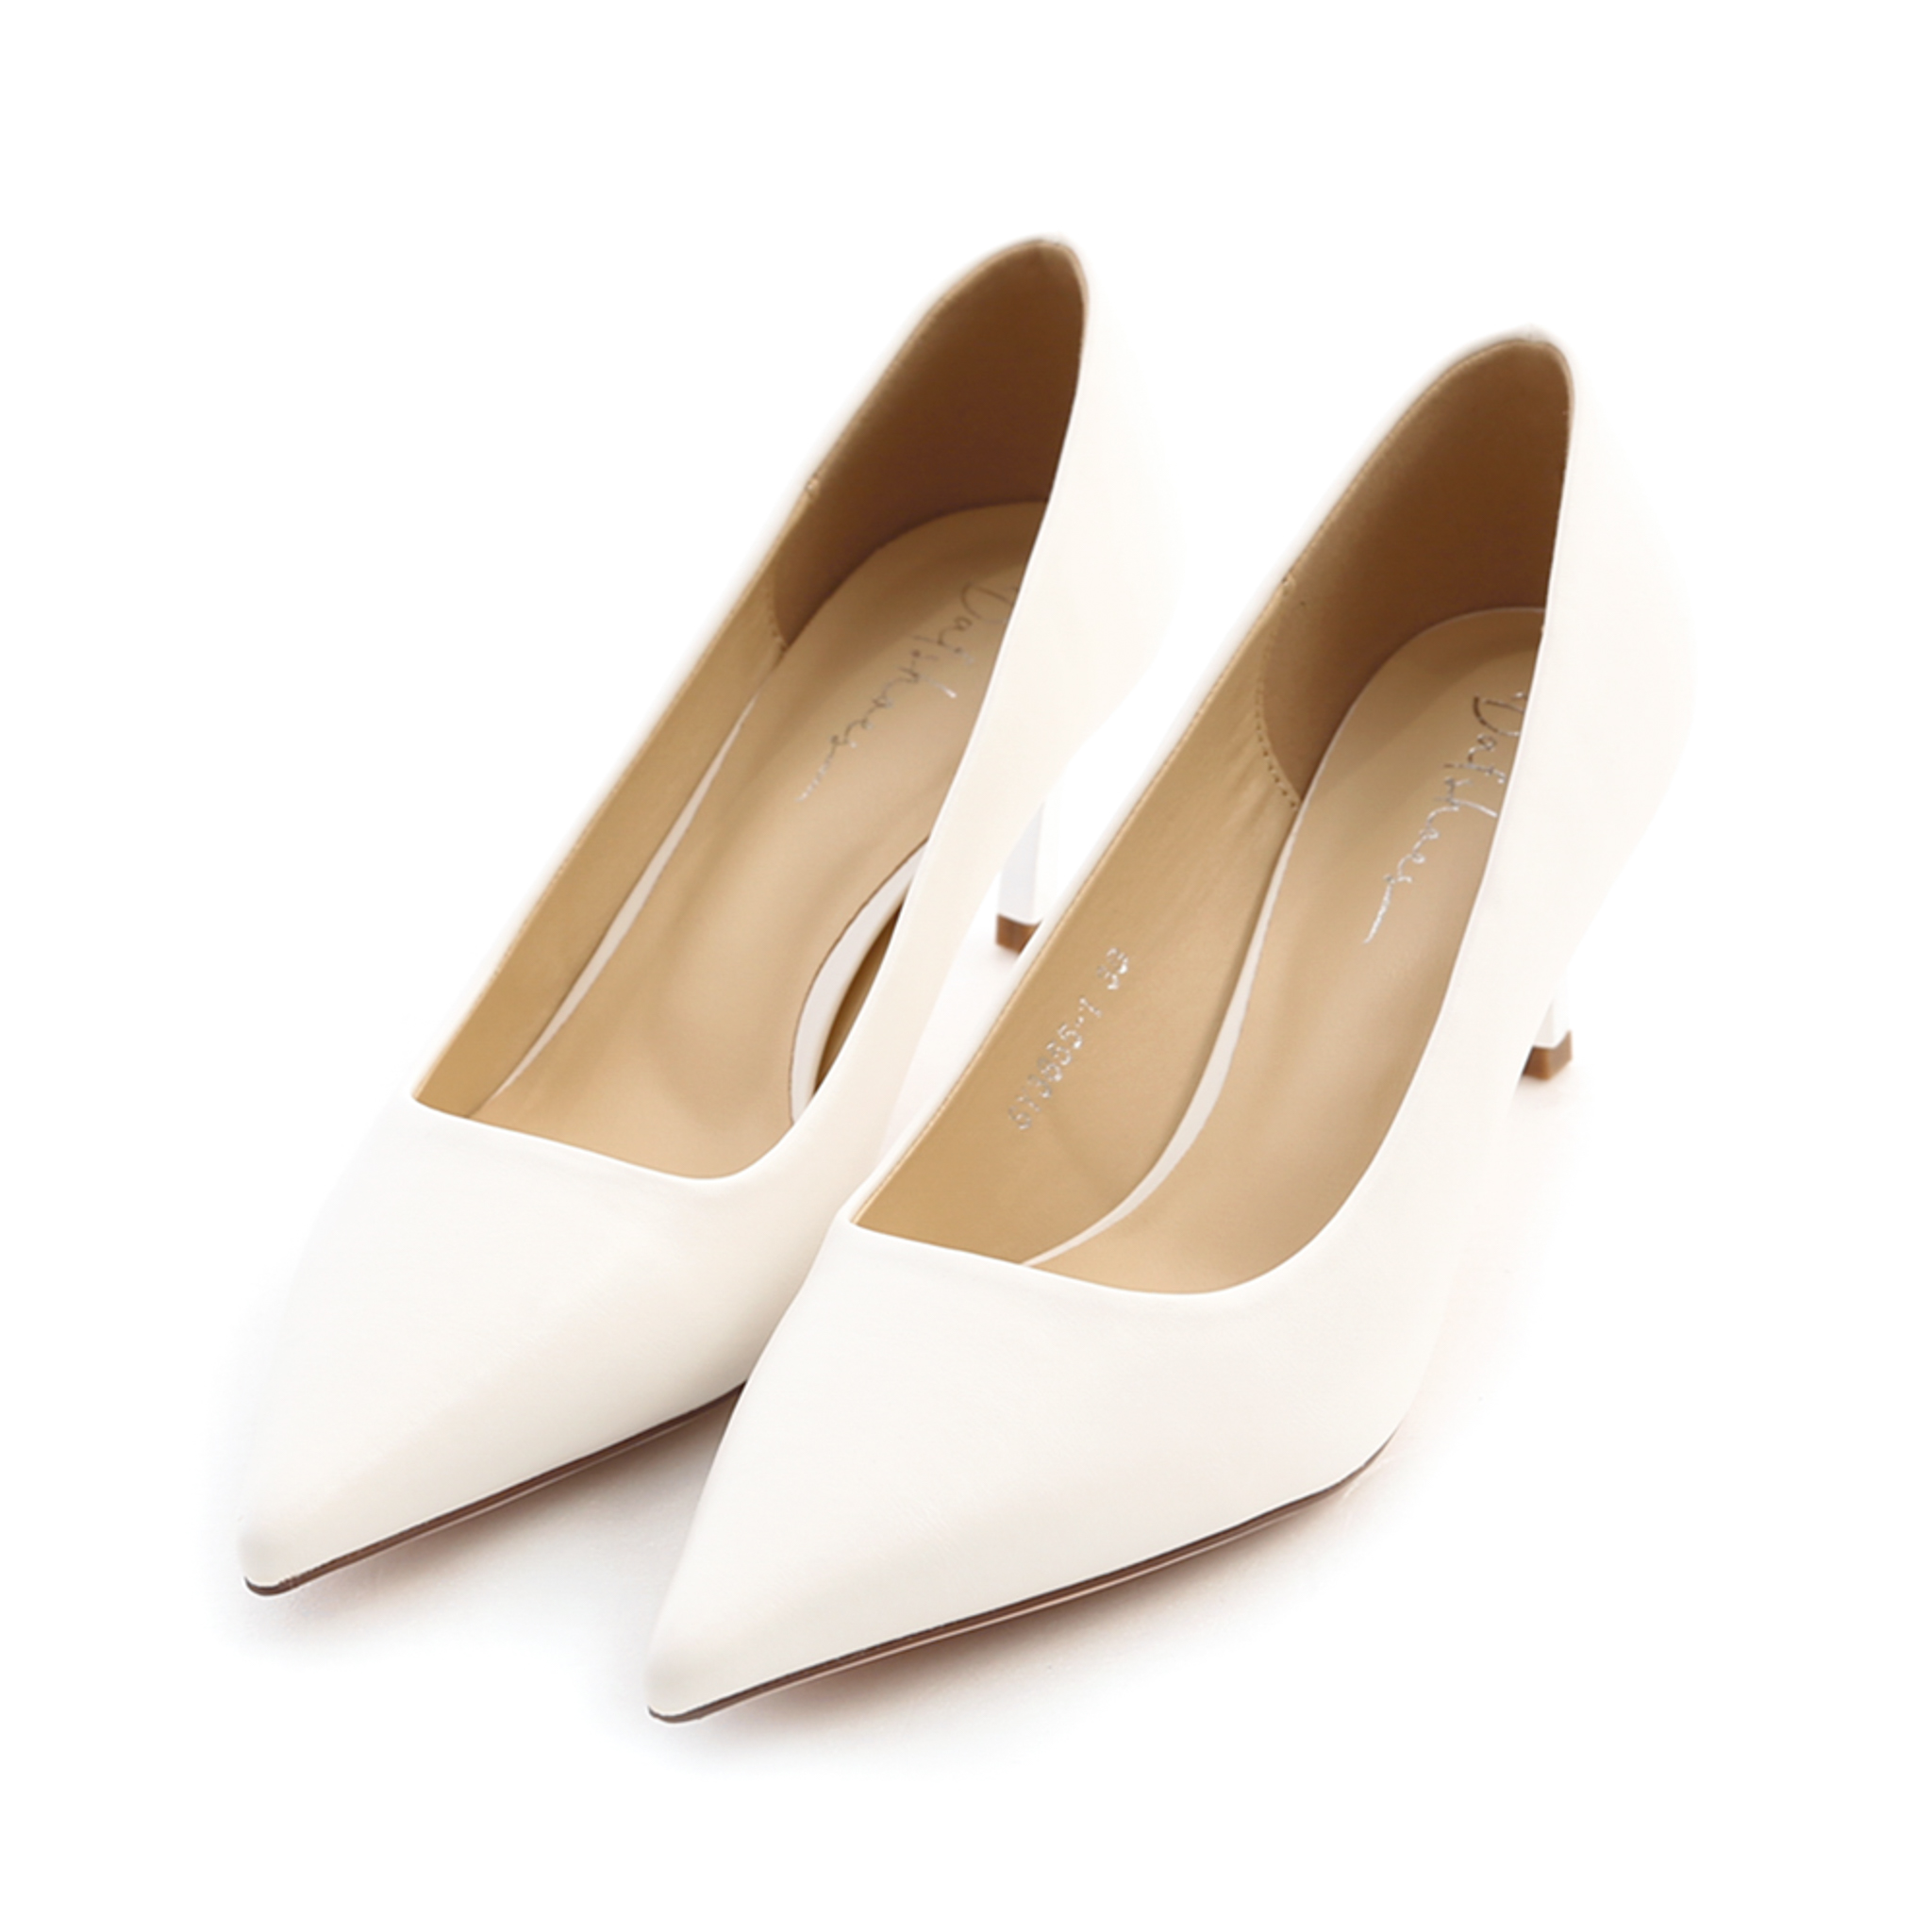 Plain Pointed Toe 6cm High-Heels White